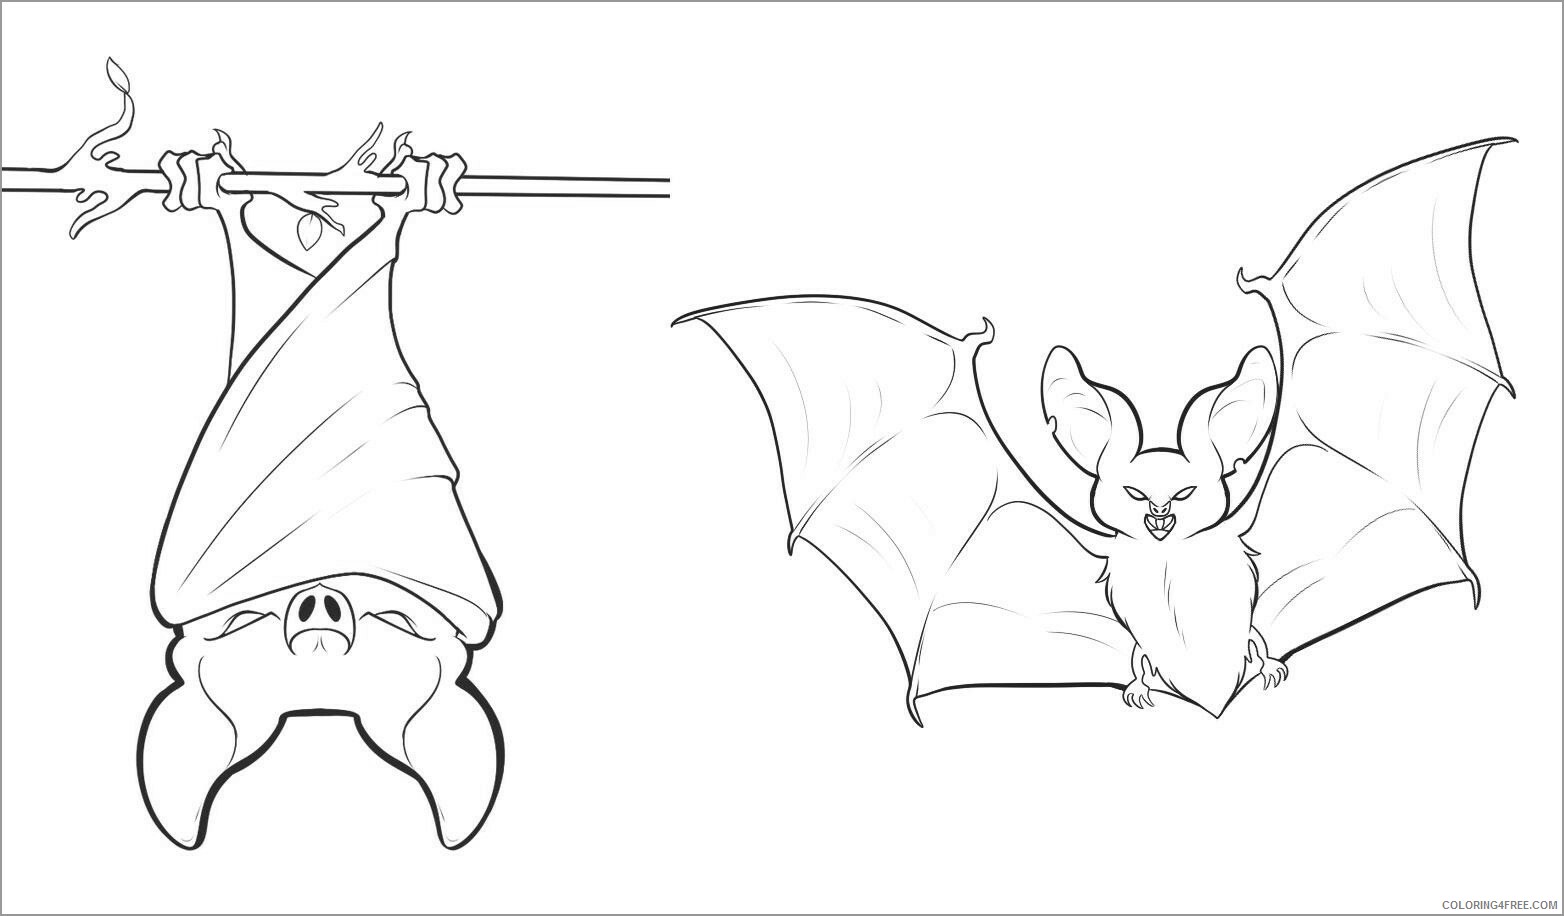 Bat Coloring Pages Animal Printable Sheets cute bat 2021 0229 Coloring4free